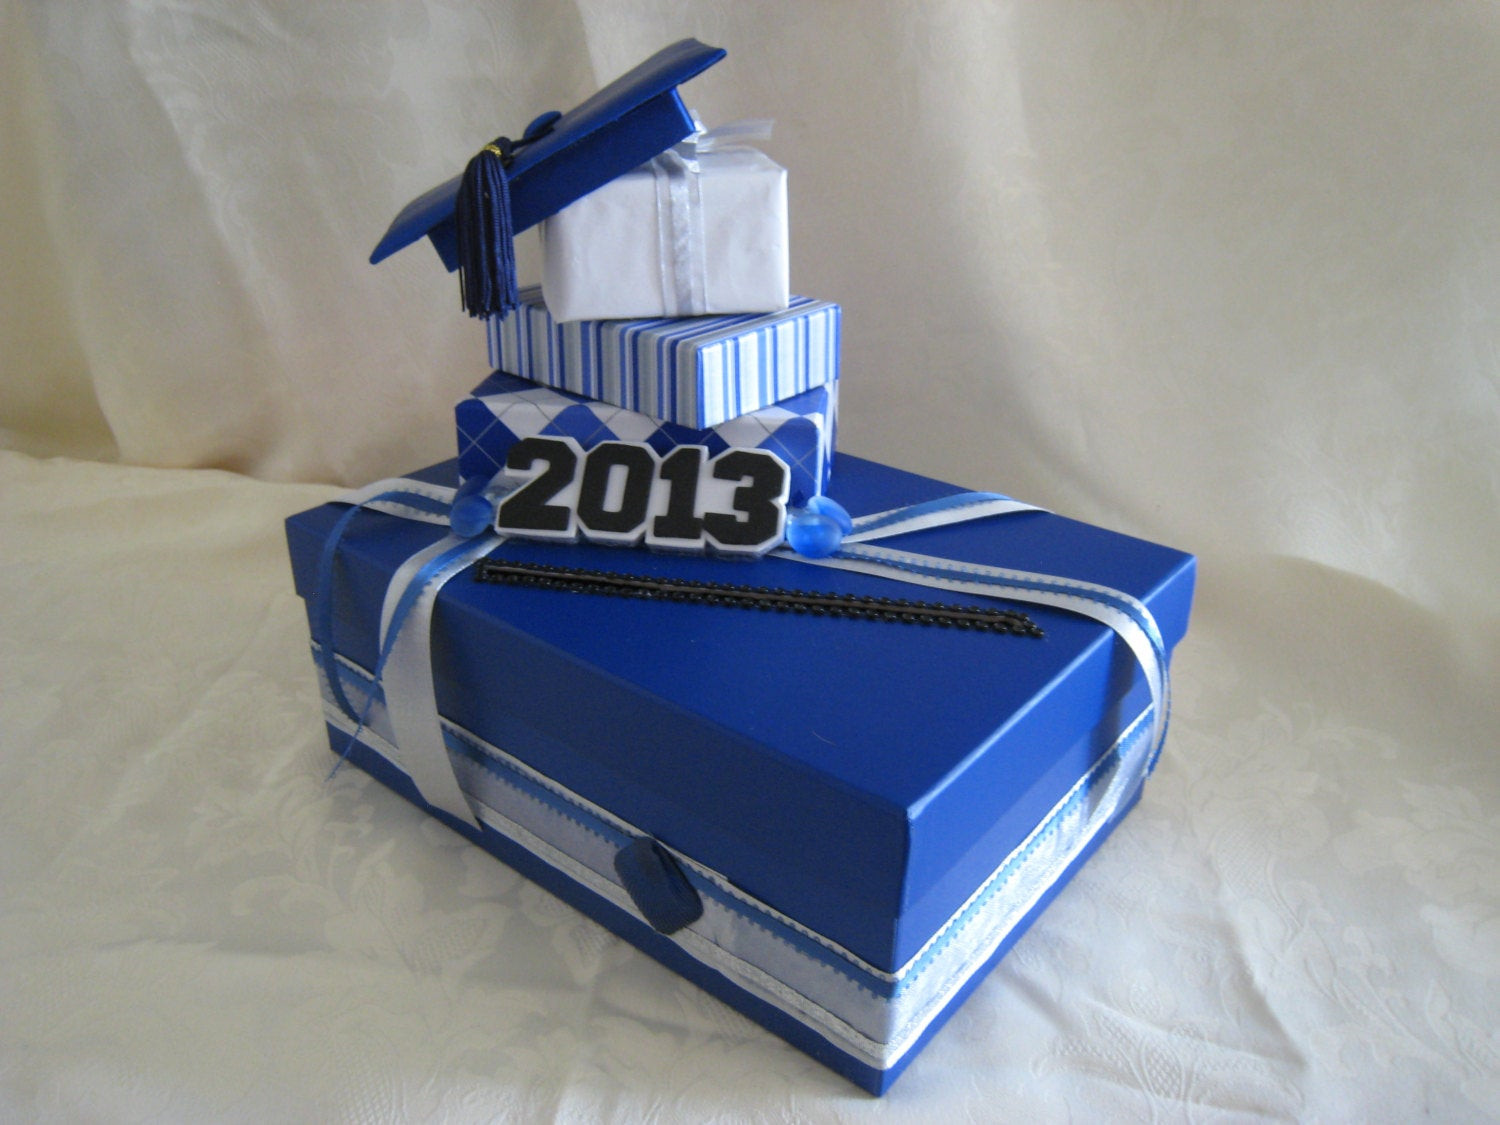 Card Box Ideas For Graduation Party
 Royal Blue Silver White Graduation Party Card Box